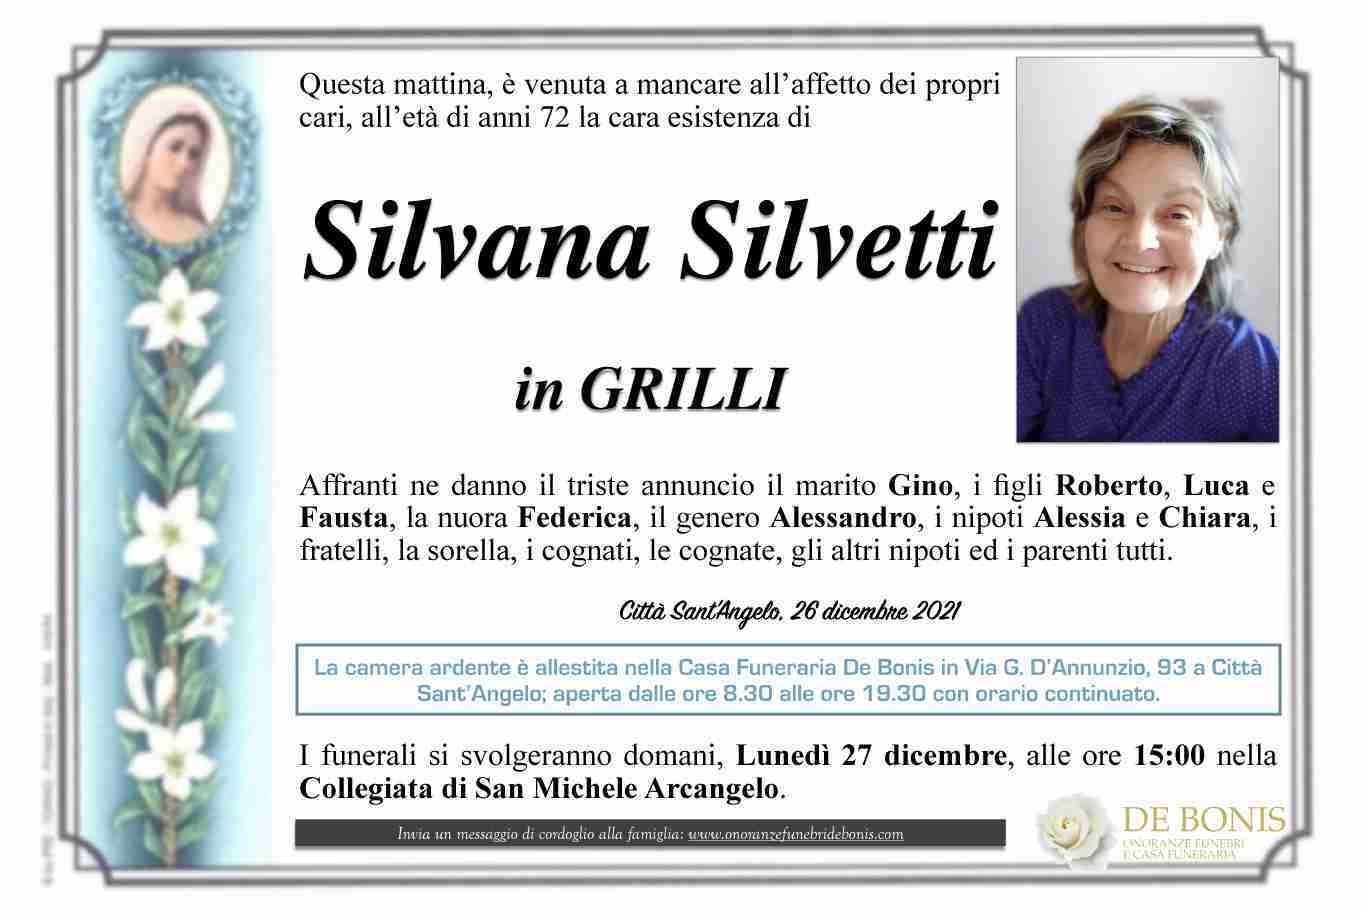 Silvana Silvetti